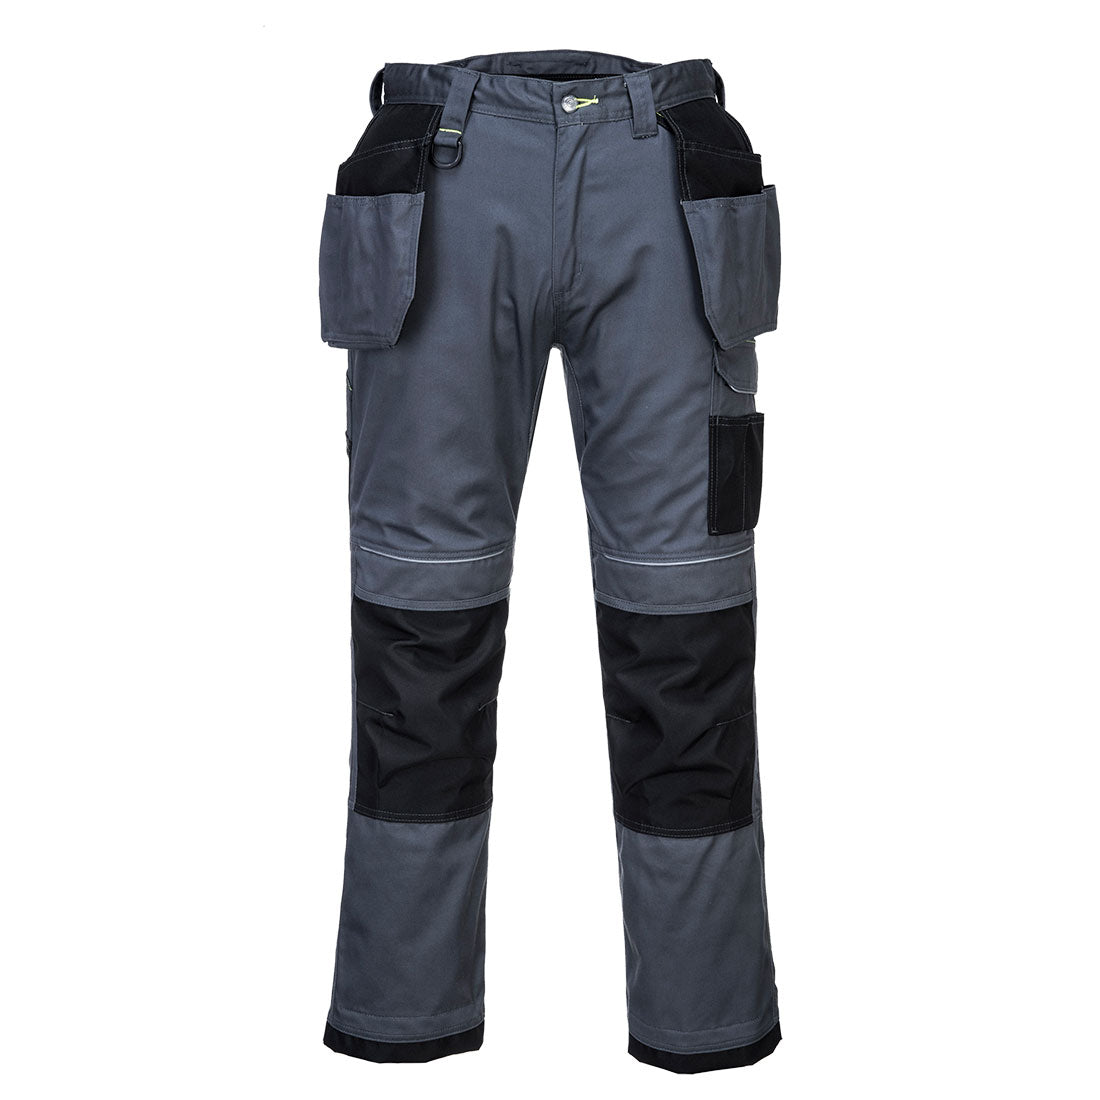 Portwest T602 - Grey/Black  32 Regular PW3 Holster Work Trousers Combat Cargo Pants